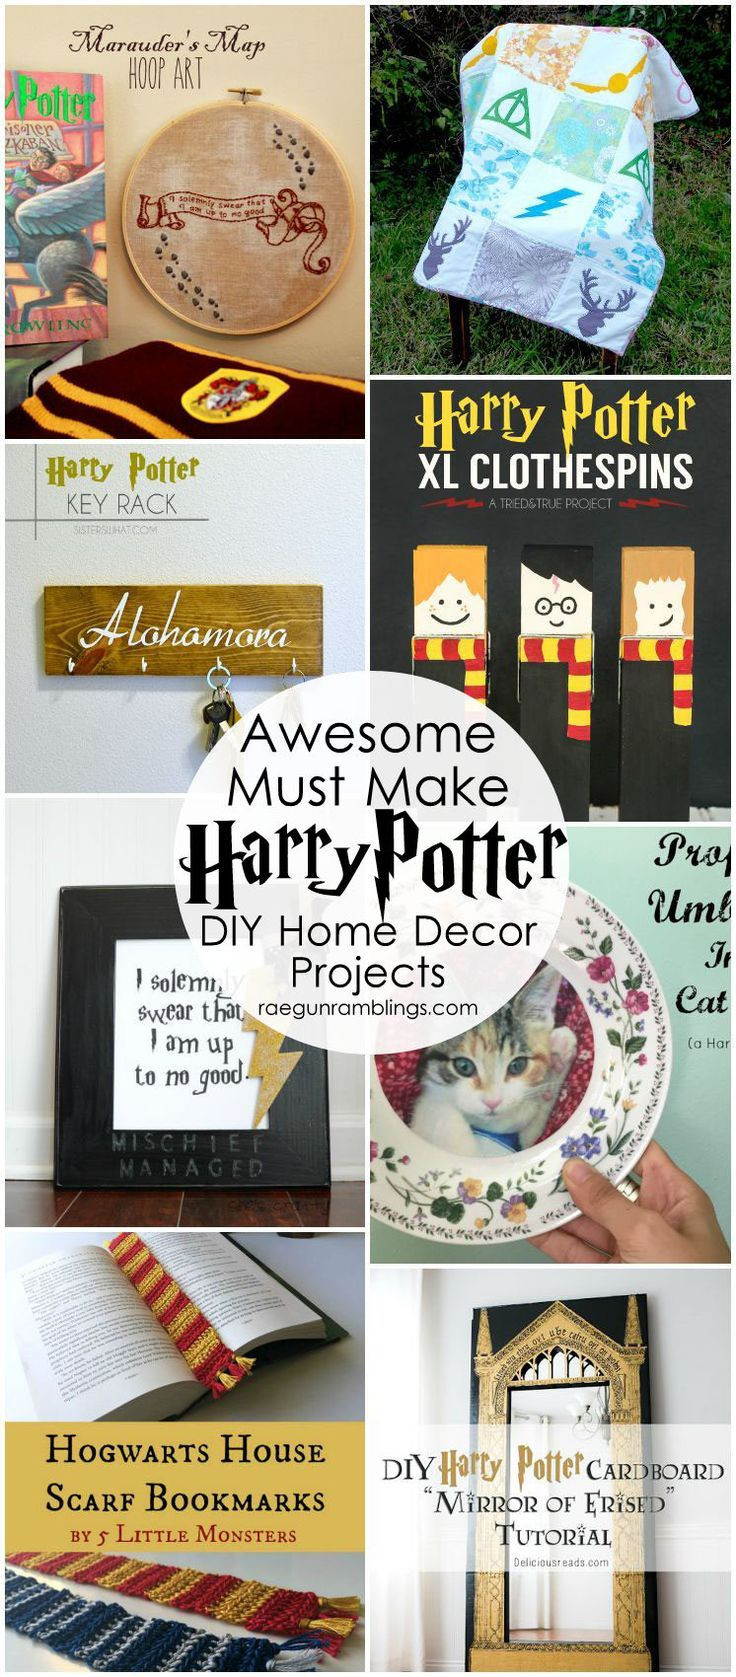 Best ideas about Harry Potter DIY Room Decor
. Save or Pin 1000 ideas about Harry Potter Decor on Pinterest Now.